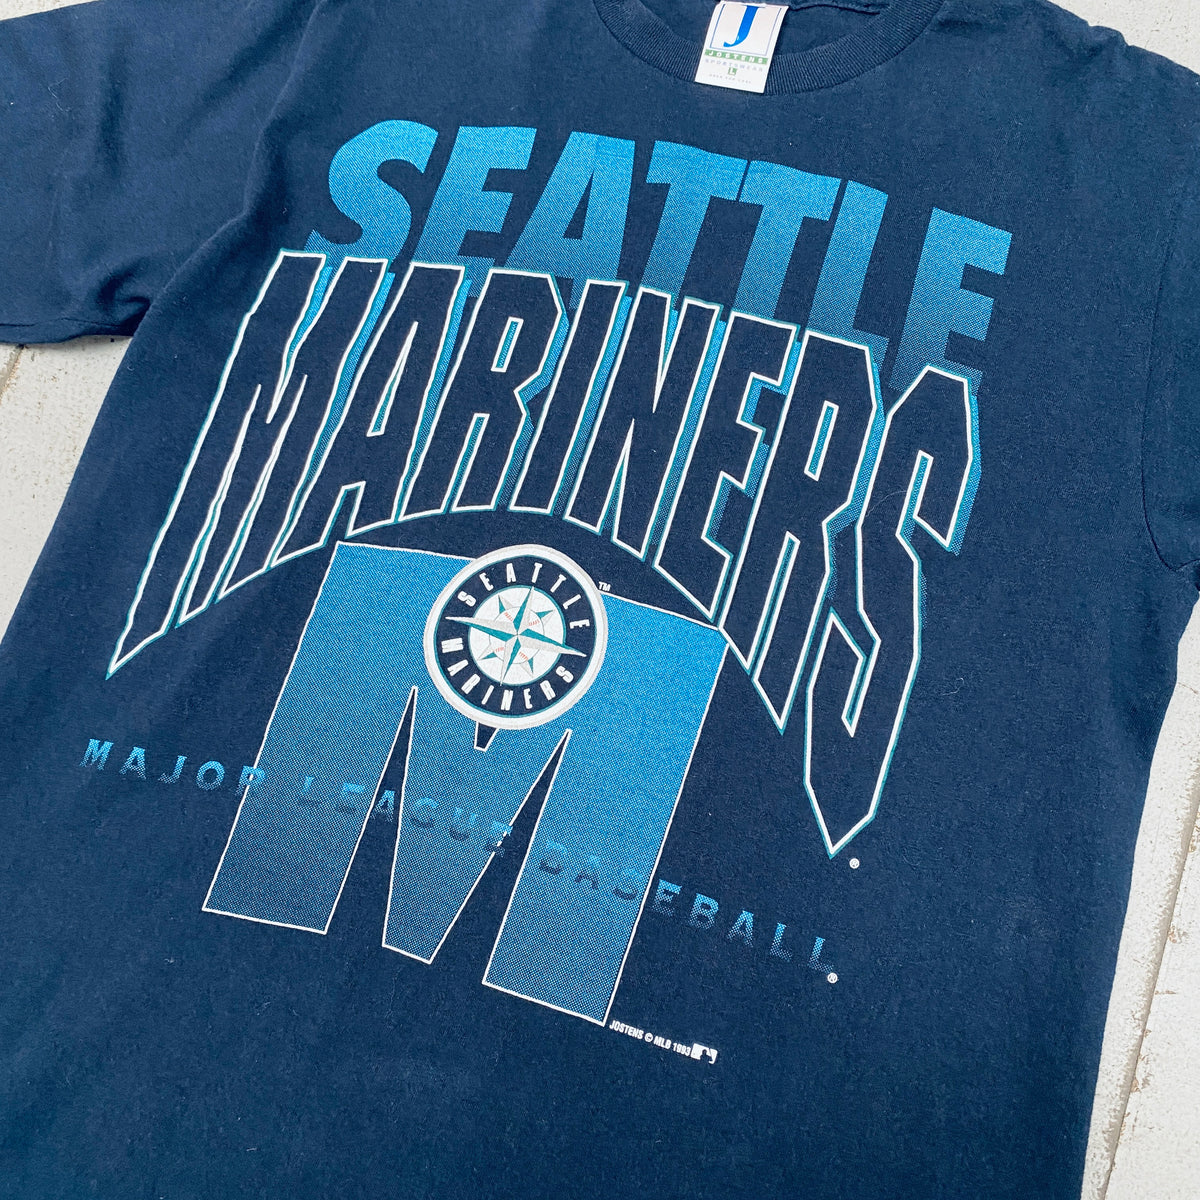 Seattle Mariners 1997 Satin Jacket